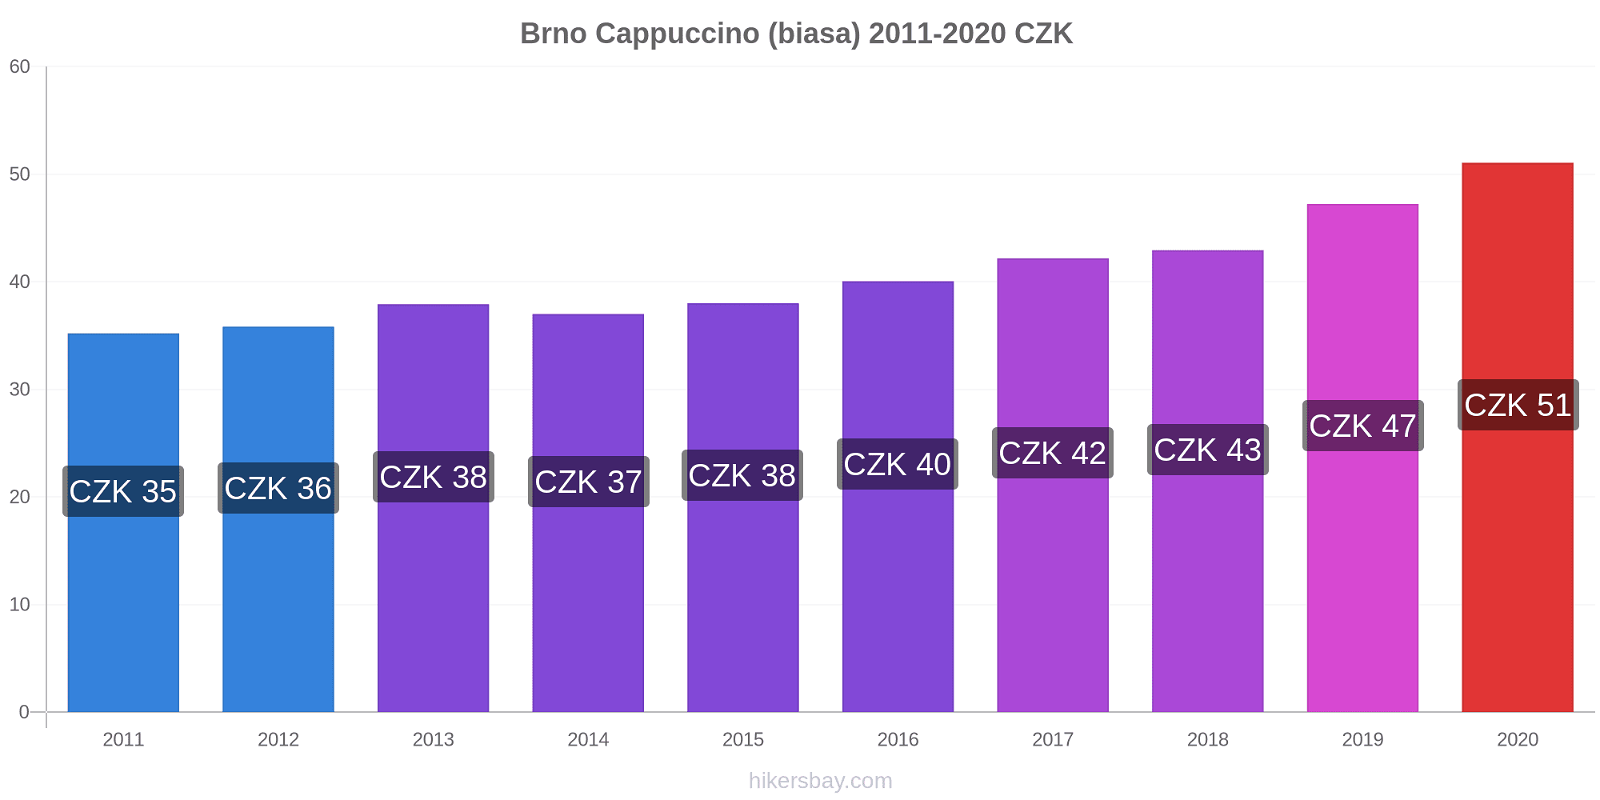 Brno perubahan harga Cappuccino (biasa) hikersbay.com